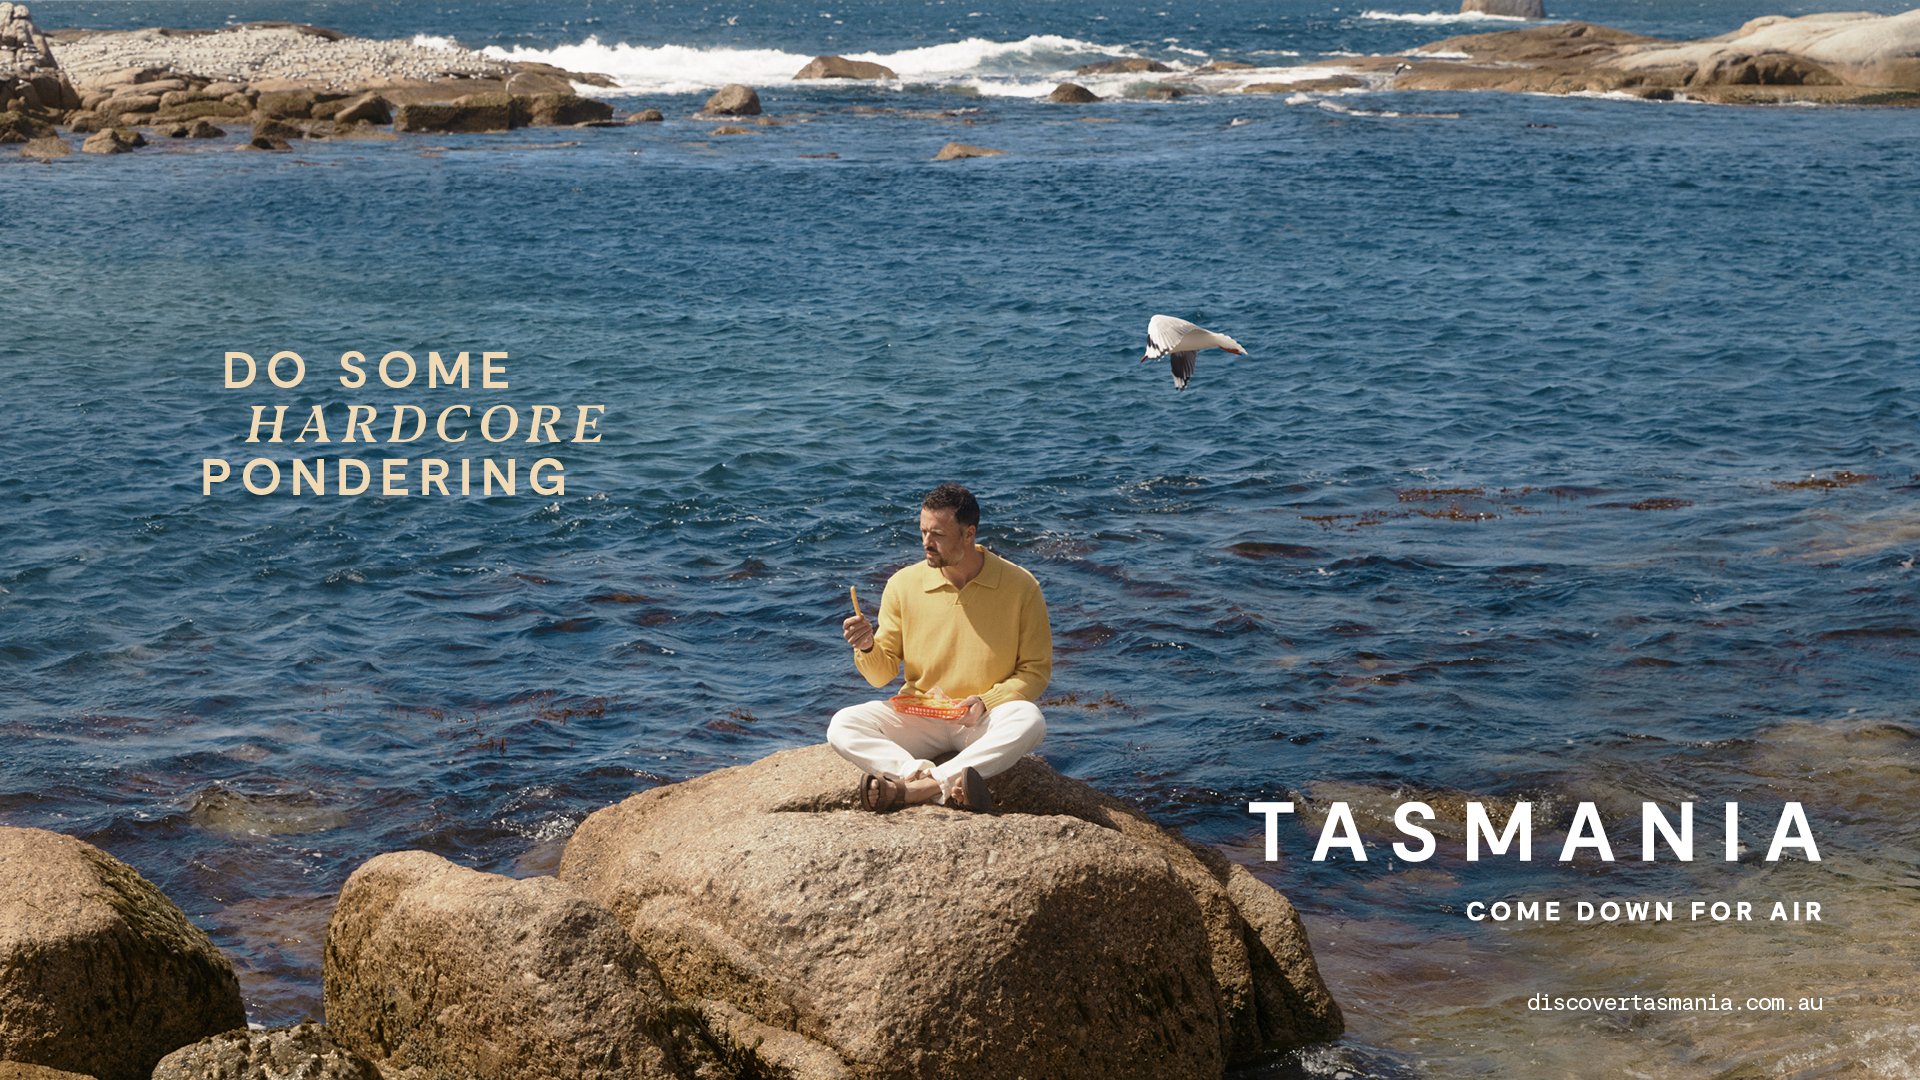 tourism tasmania advertising campaign